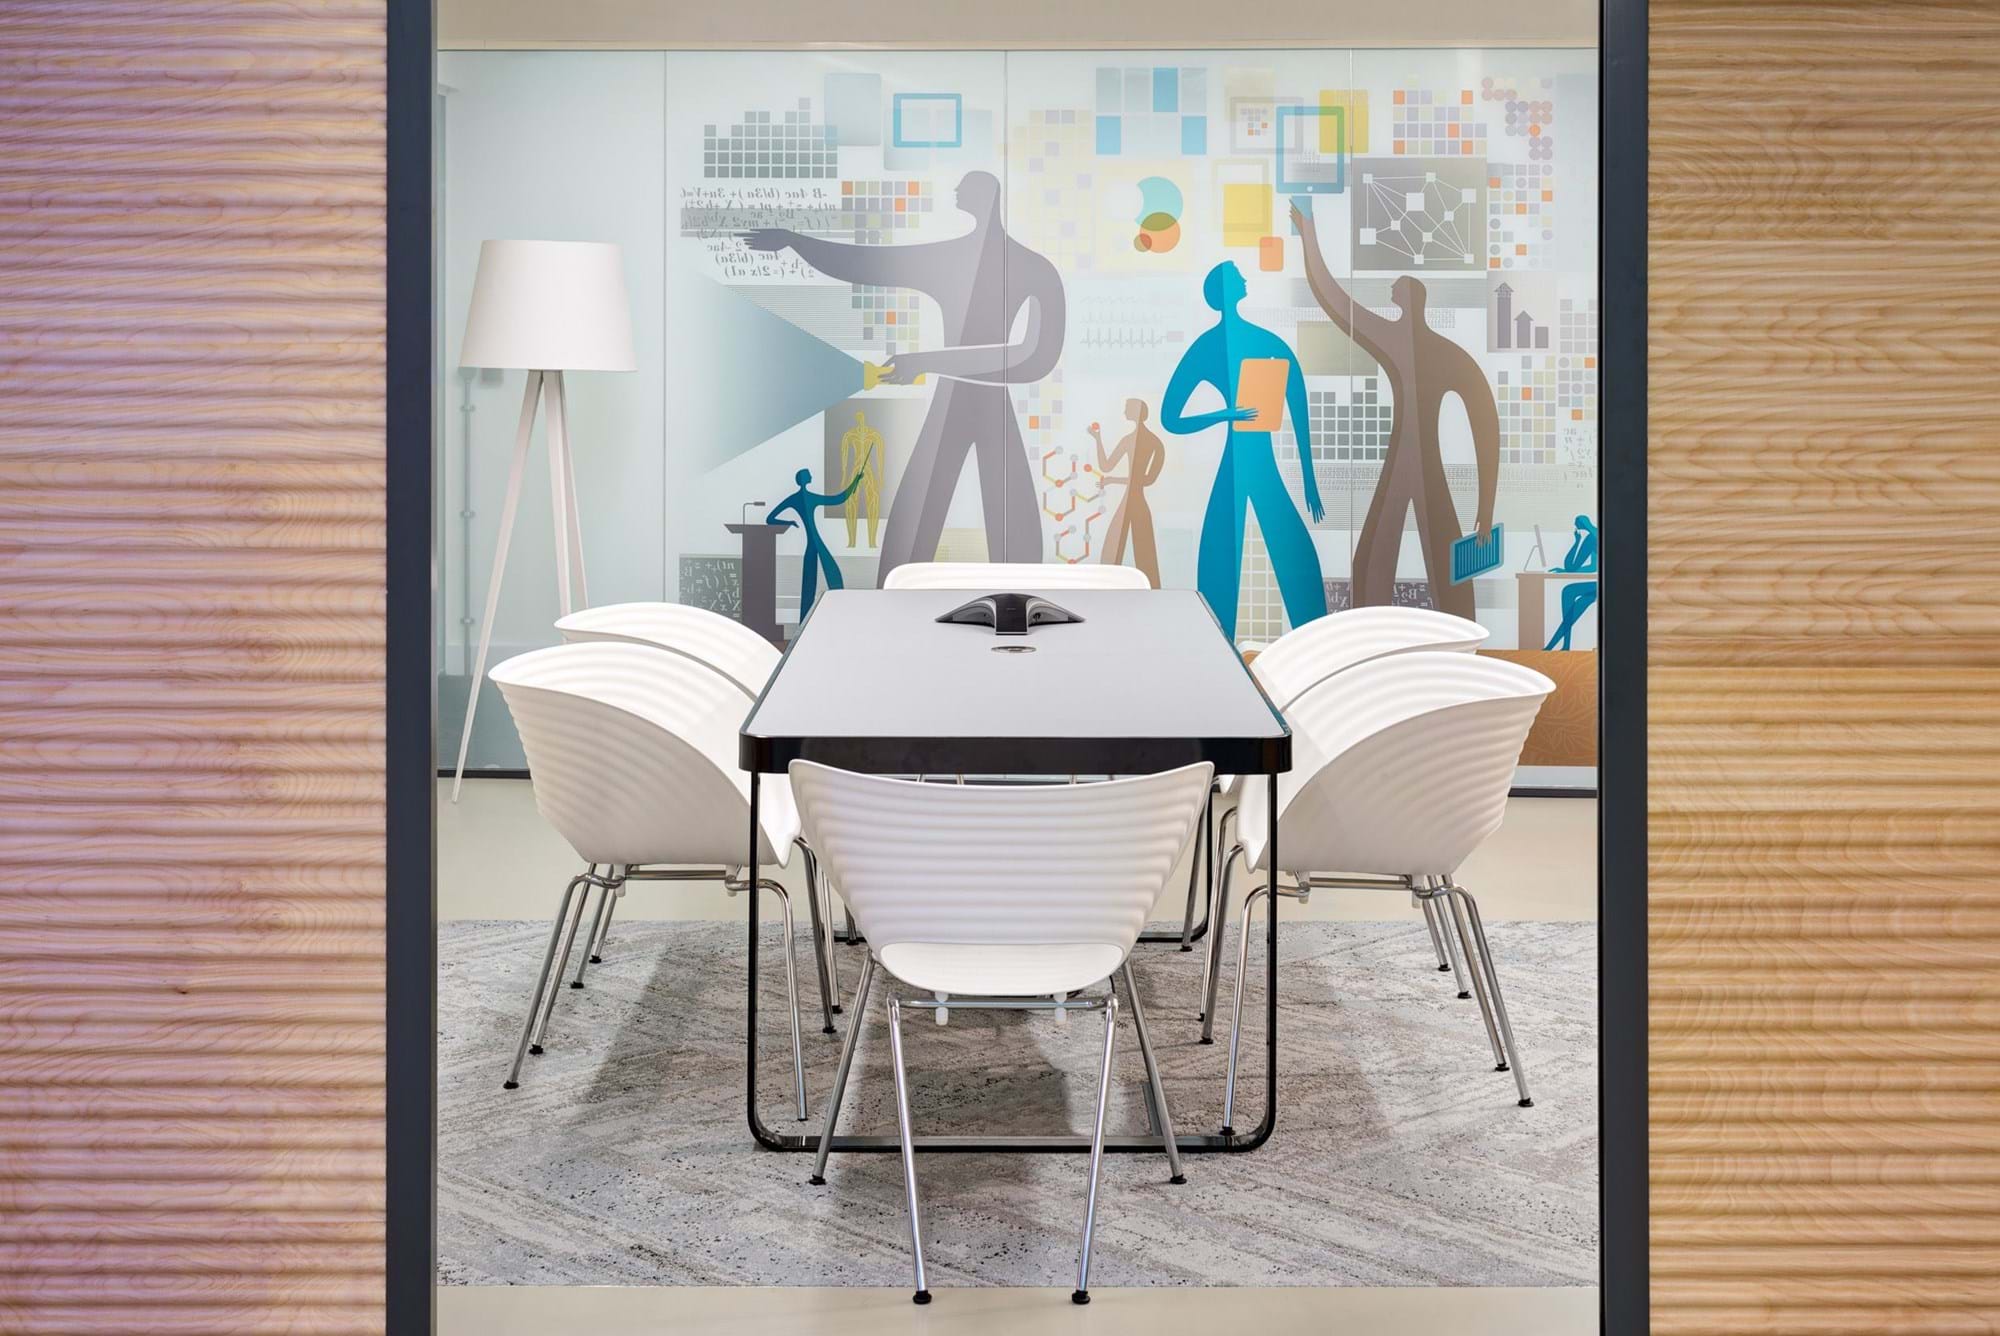 Modus Workspace office design, fit out and refurbishment - Mendeley - Mendeley 04 highres sRGB.jpg